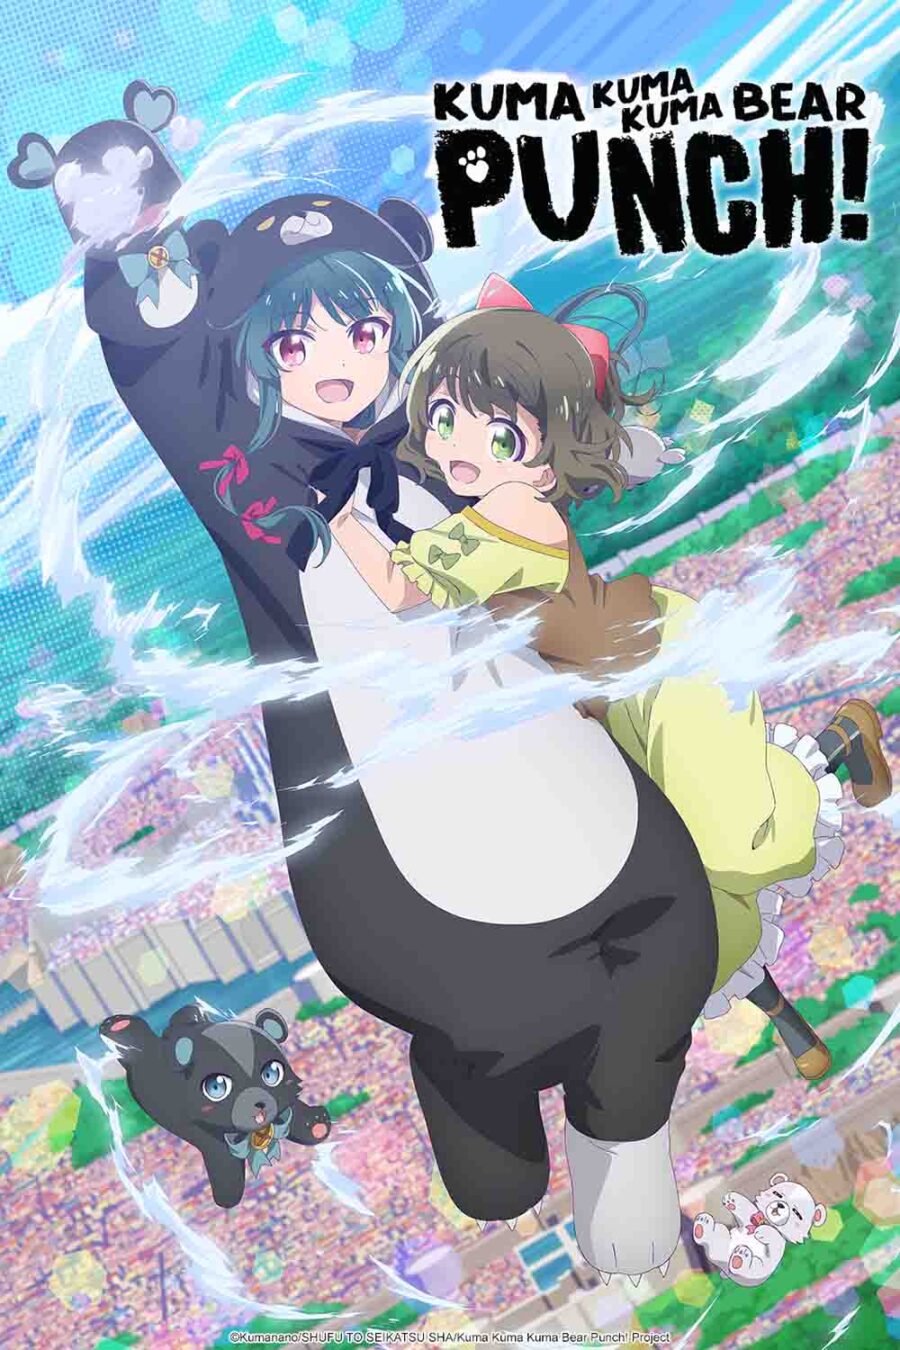 Guía de estrenos anime – Temporada de Primavera 2023